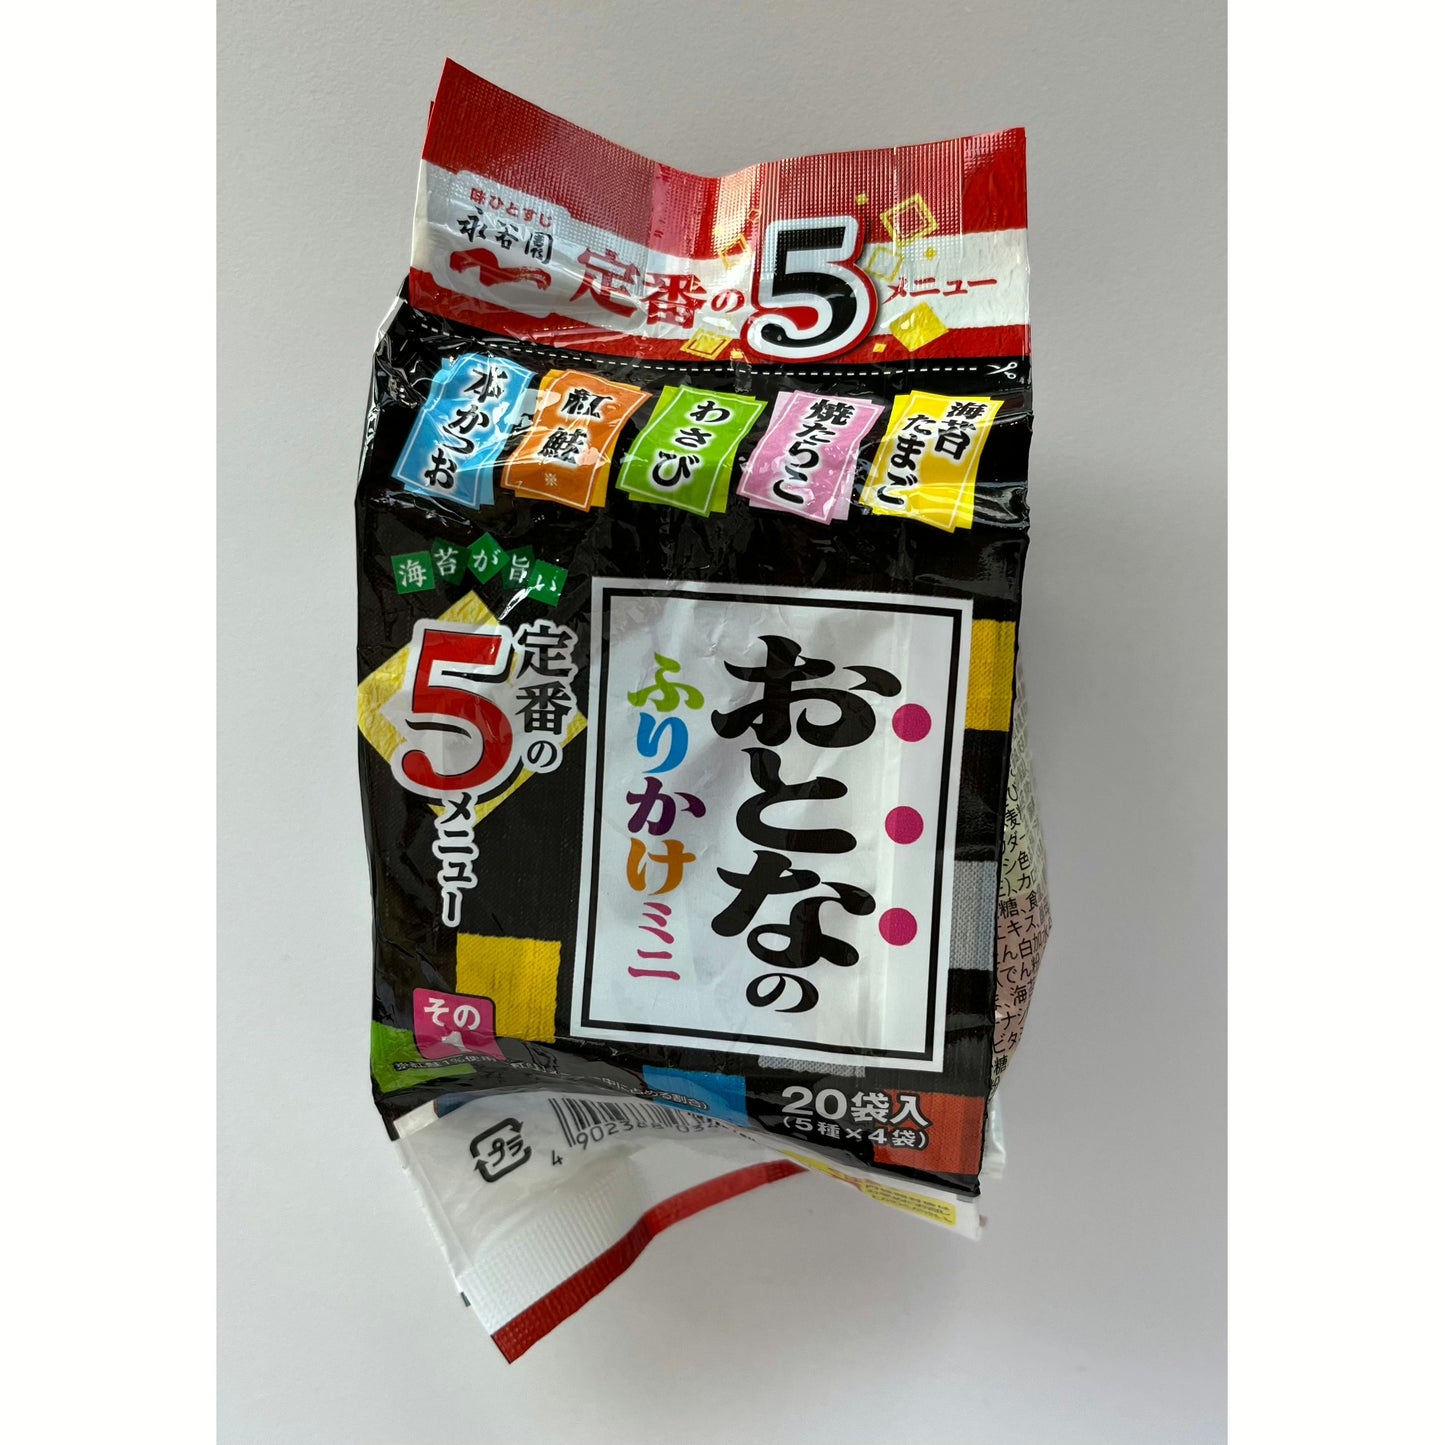 Nagatanien Otona No Furikake Rice Seasoning Mini Variety Pack (20)